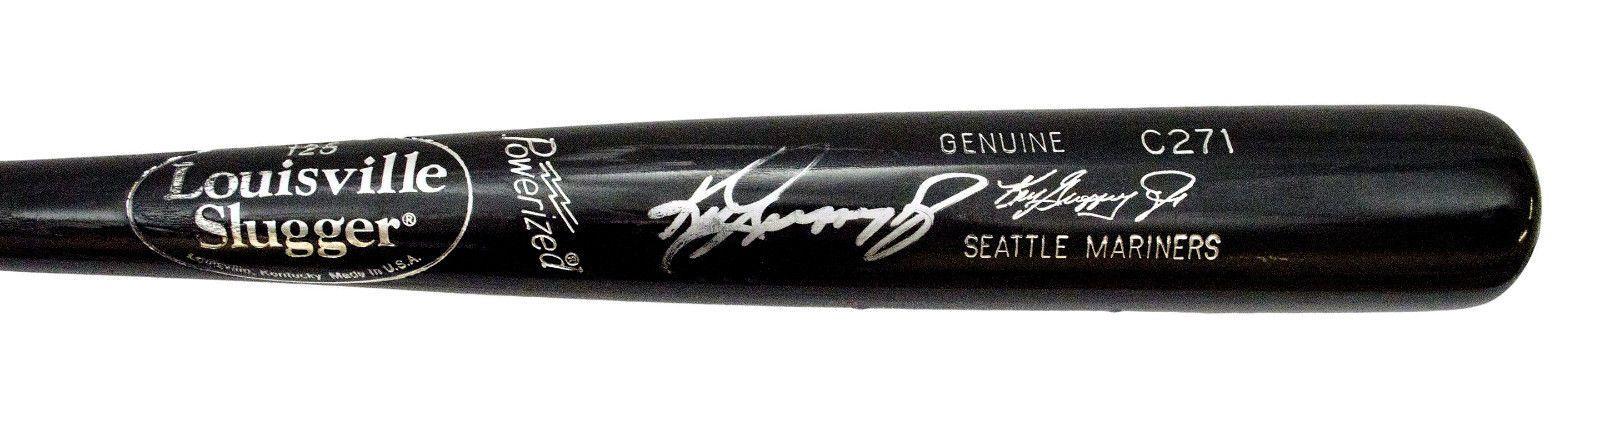 Louisville Slugger Diamond Logo - Ken Griffey Jr. Signed Autographed Louisville Slugger Baseball Bat